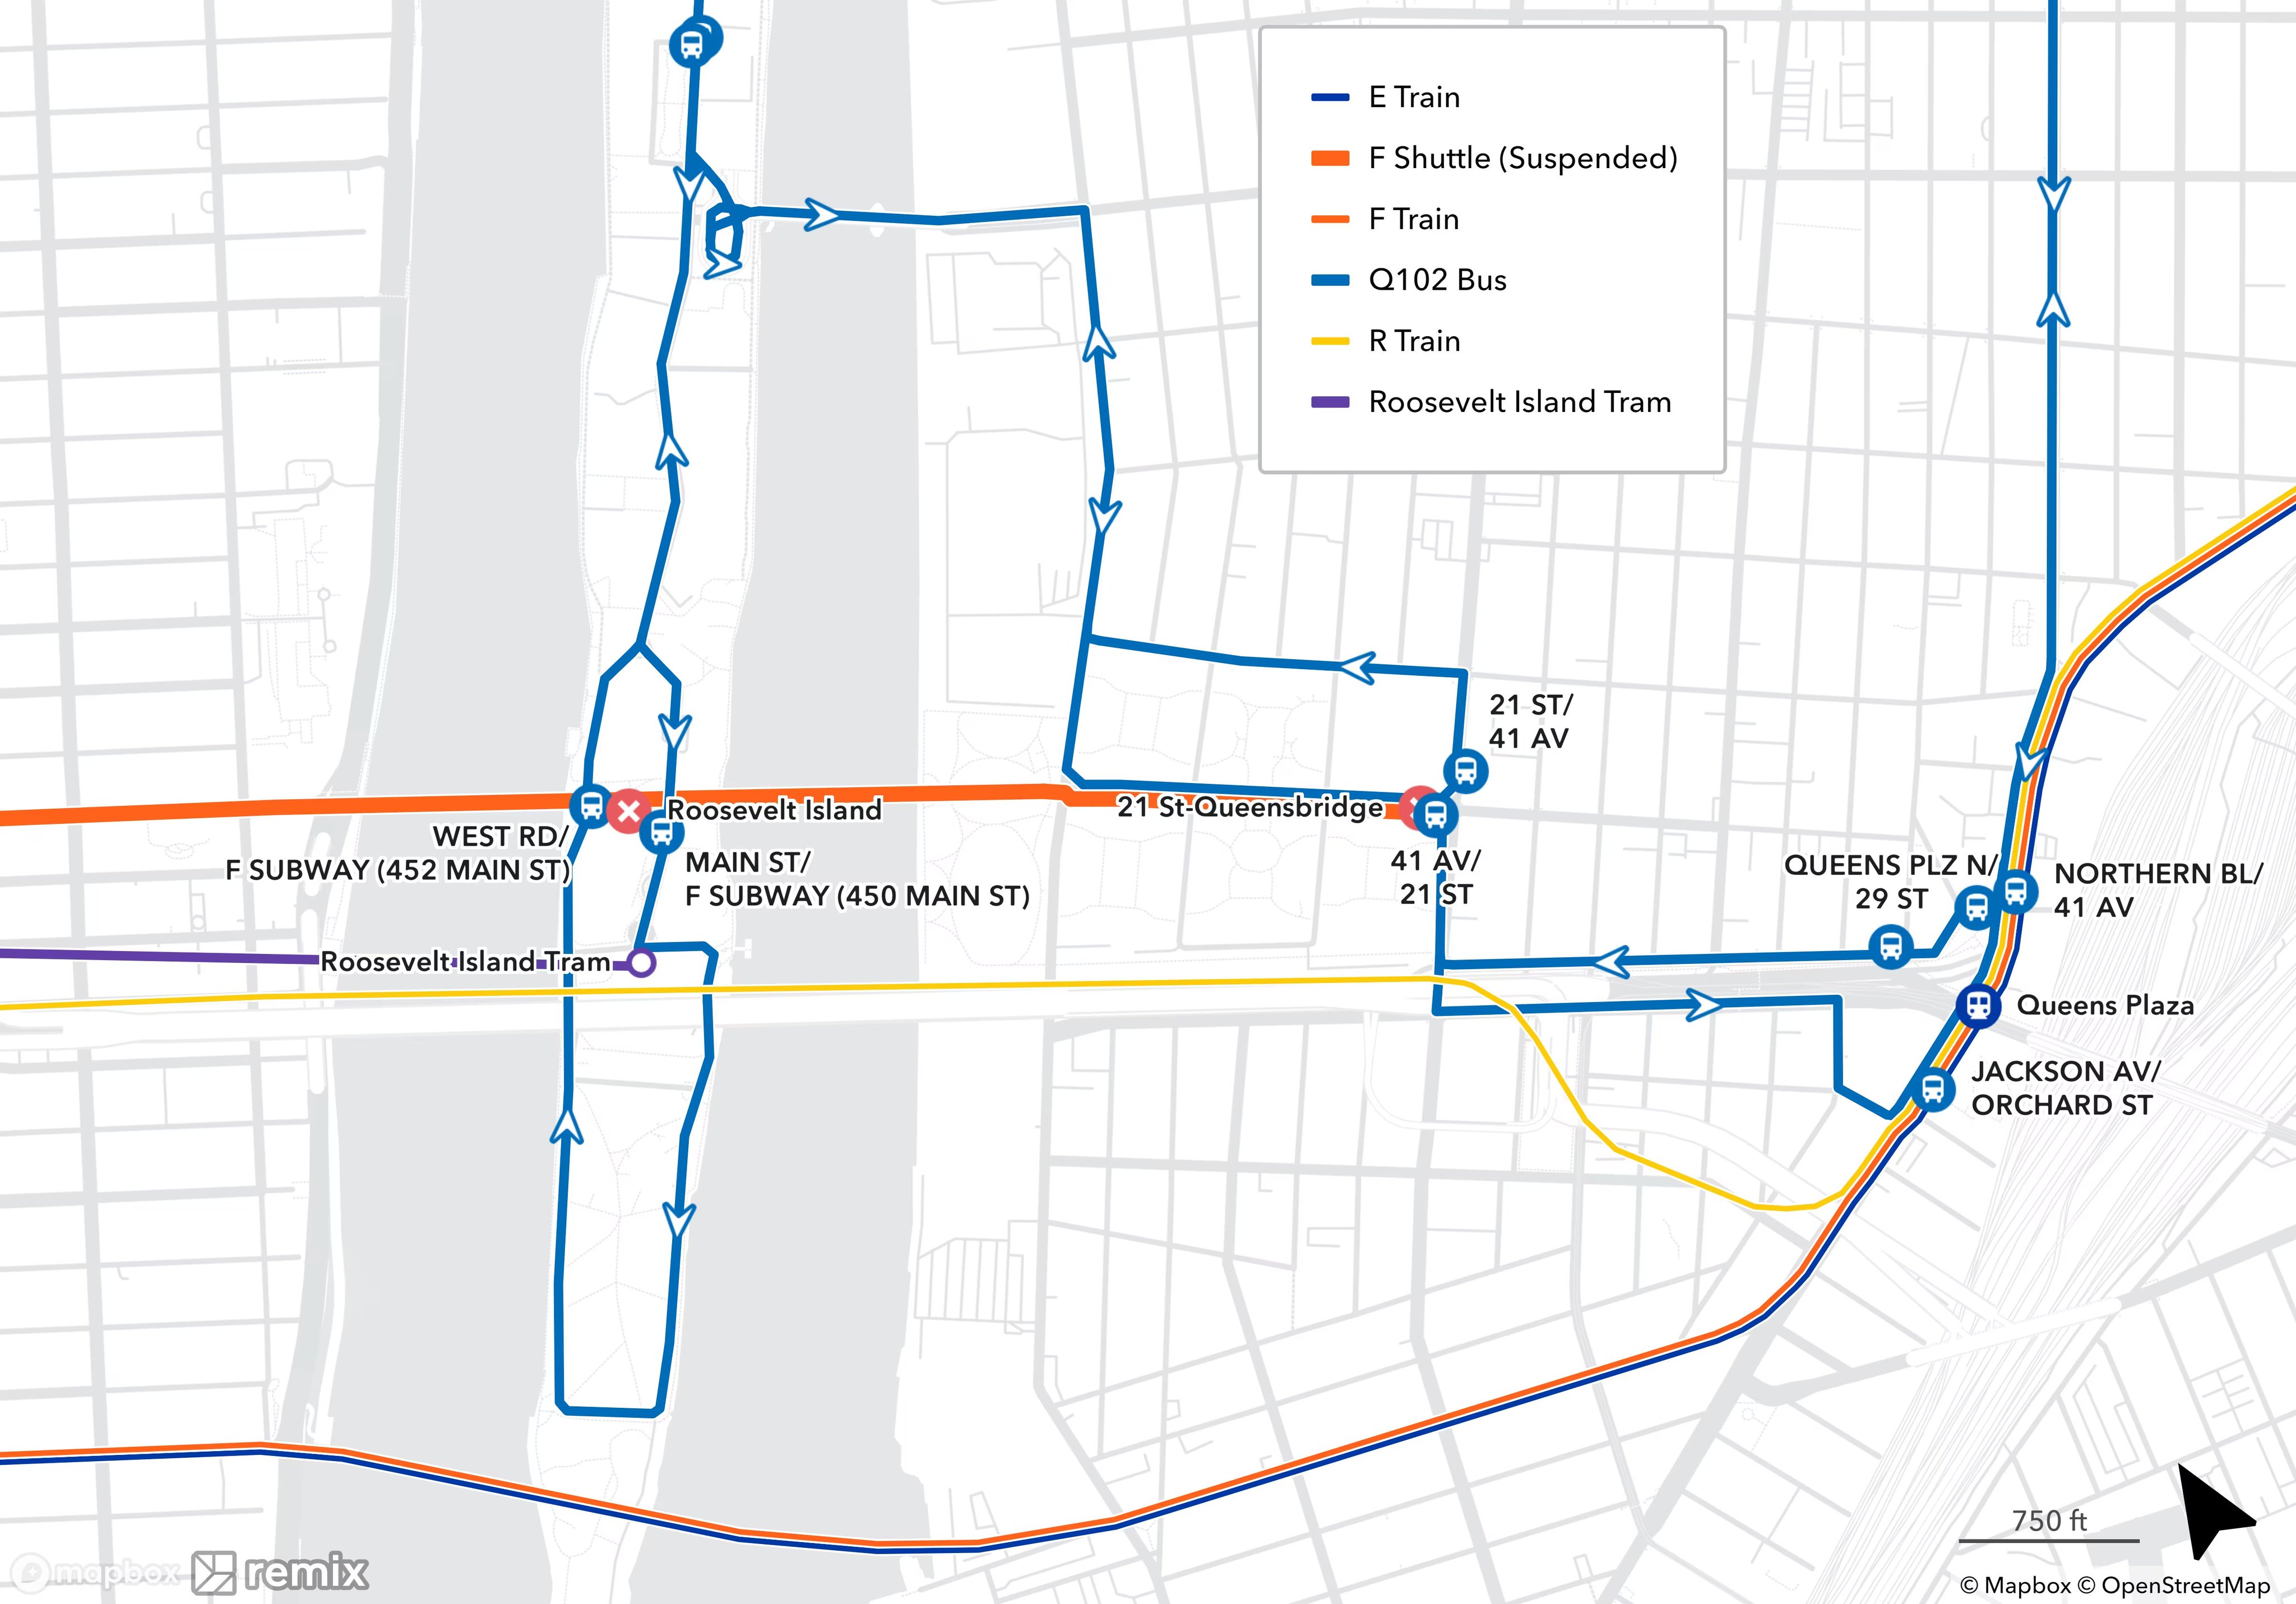 q102 bus route map